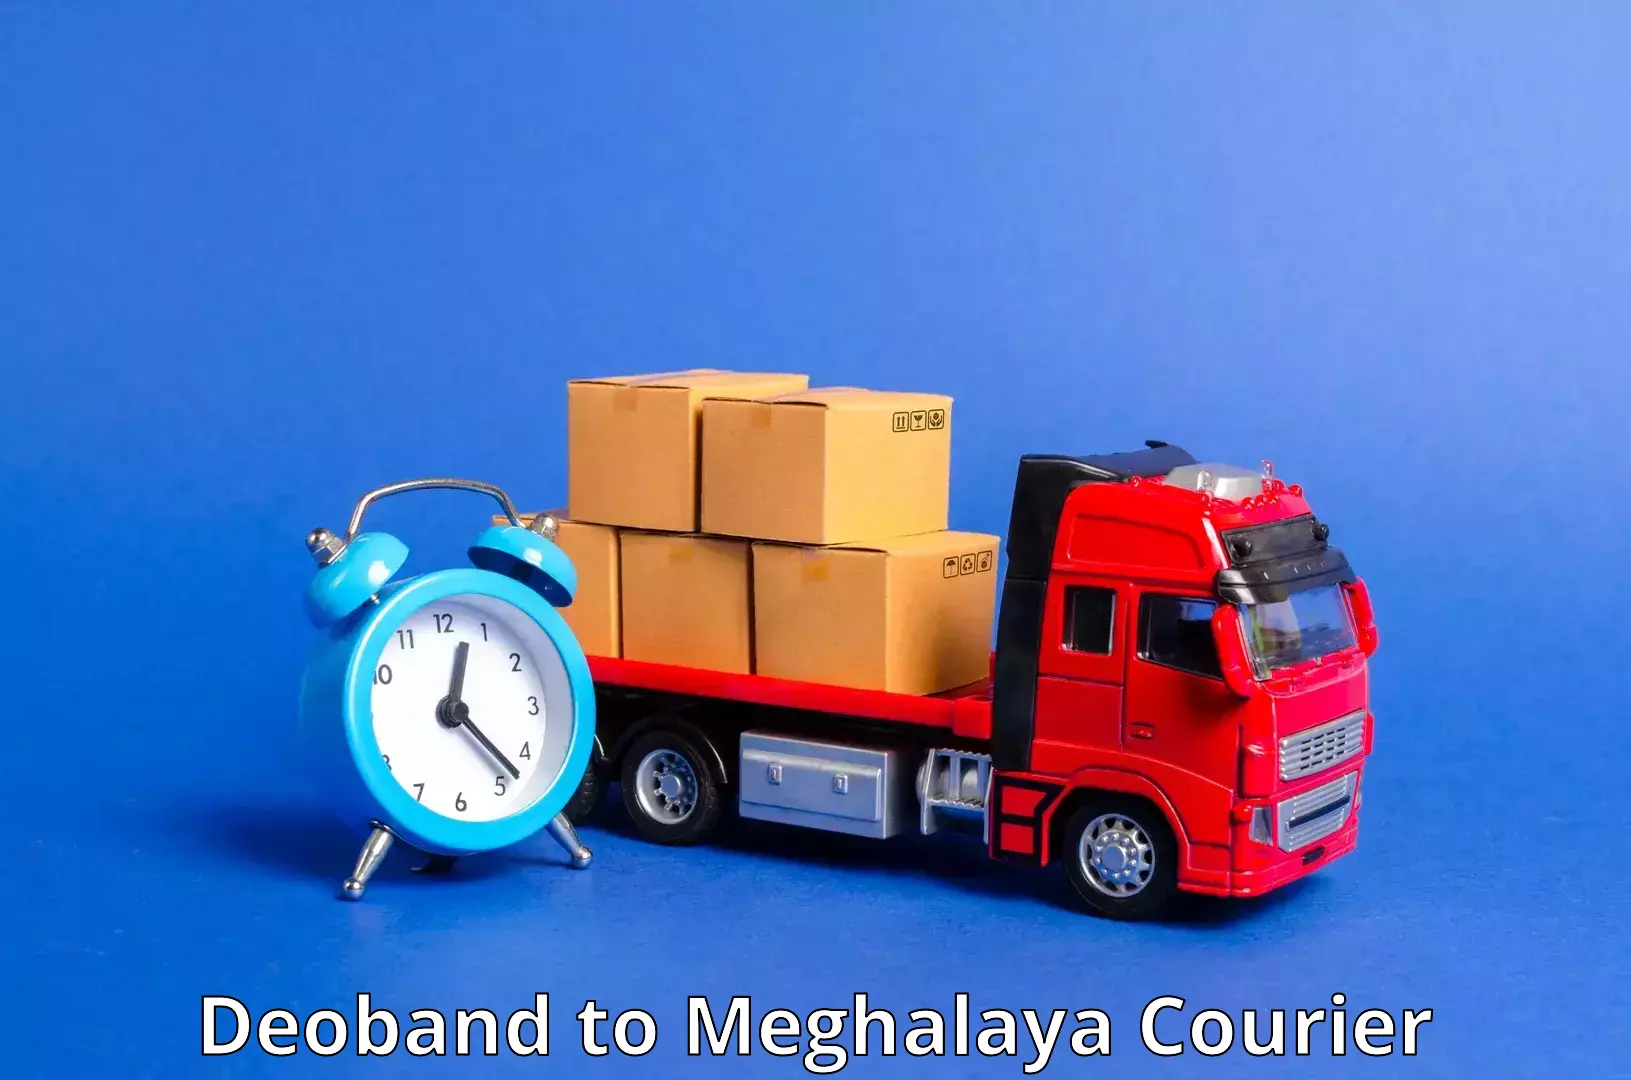 Global logistics network Deoband to Meghalaya